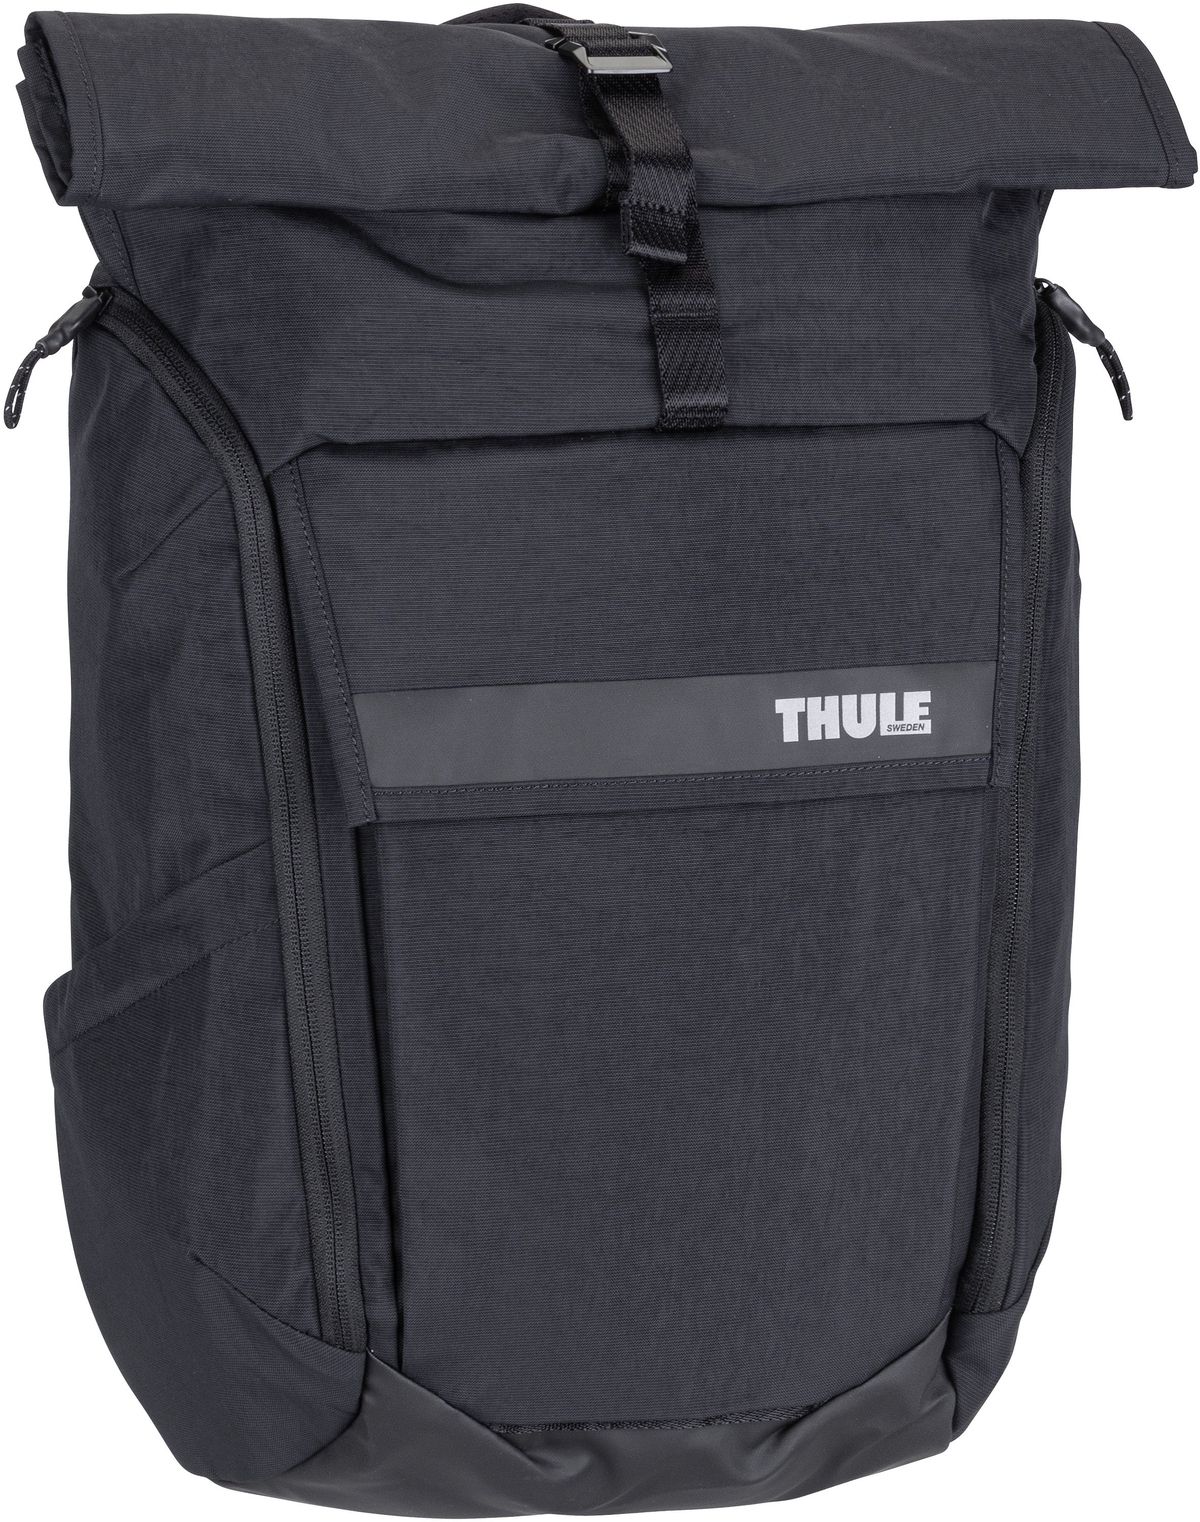 Thule Paramount 3 Backpack 24L  in Black (24 Liter), Rolltop Rucksack